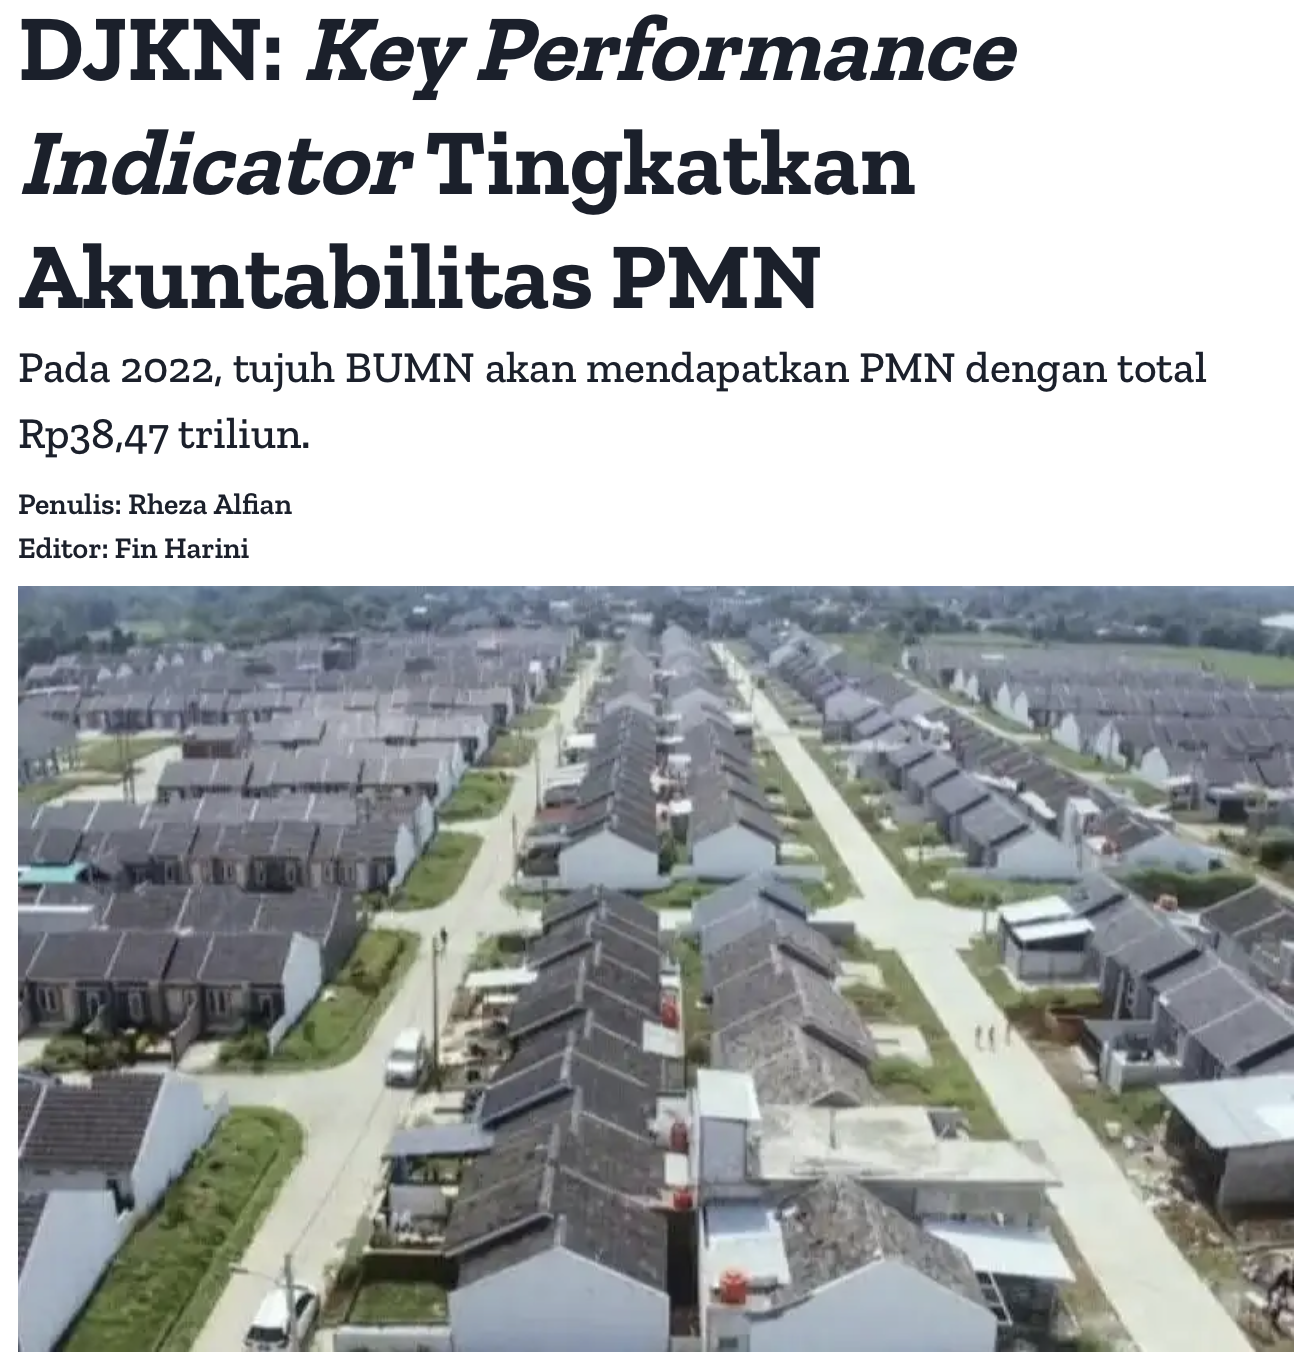  DJKN: Key Performance Indicator Tingkatkan Akuntabilitas PMN